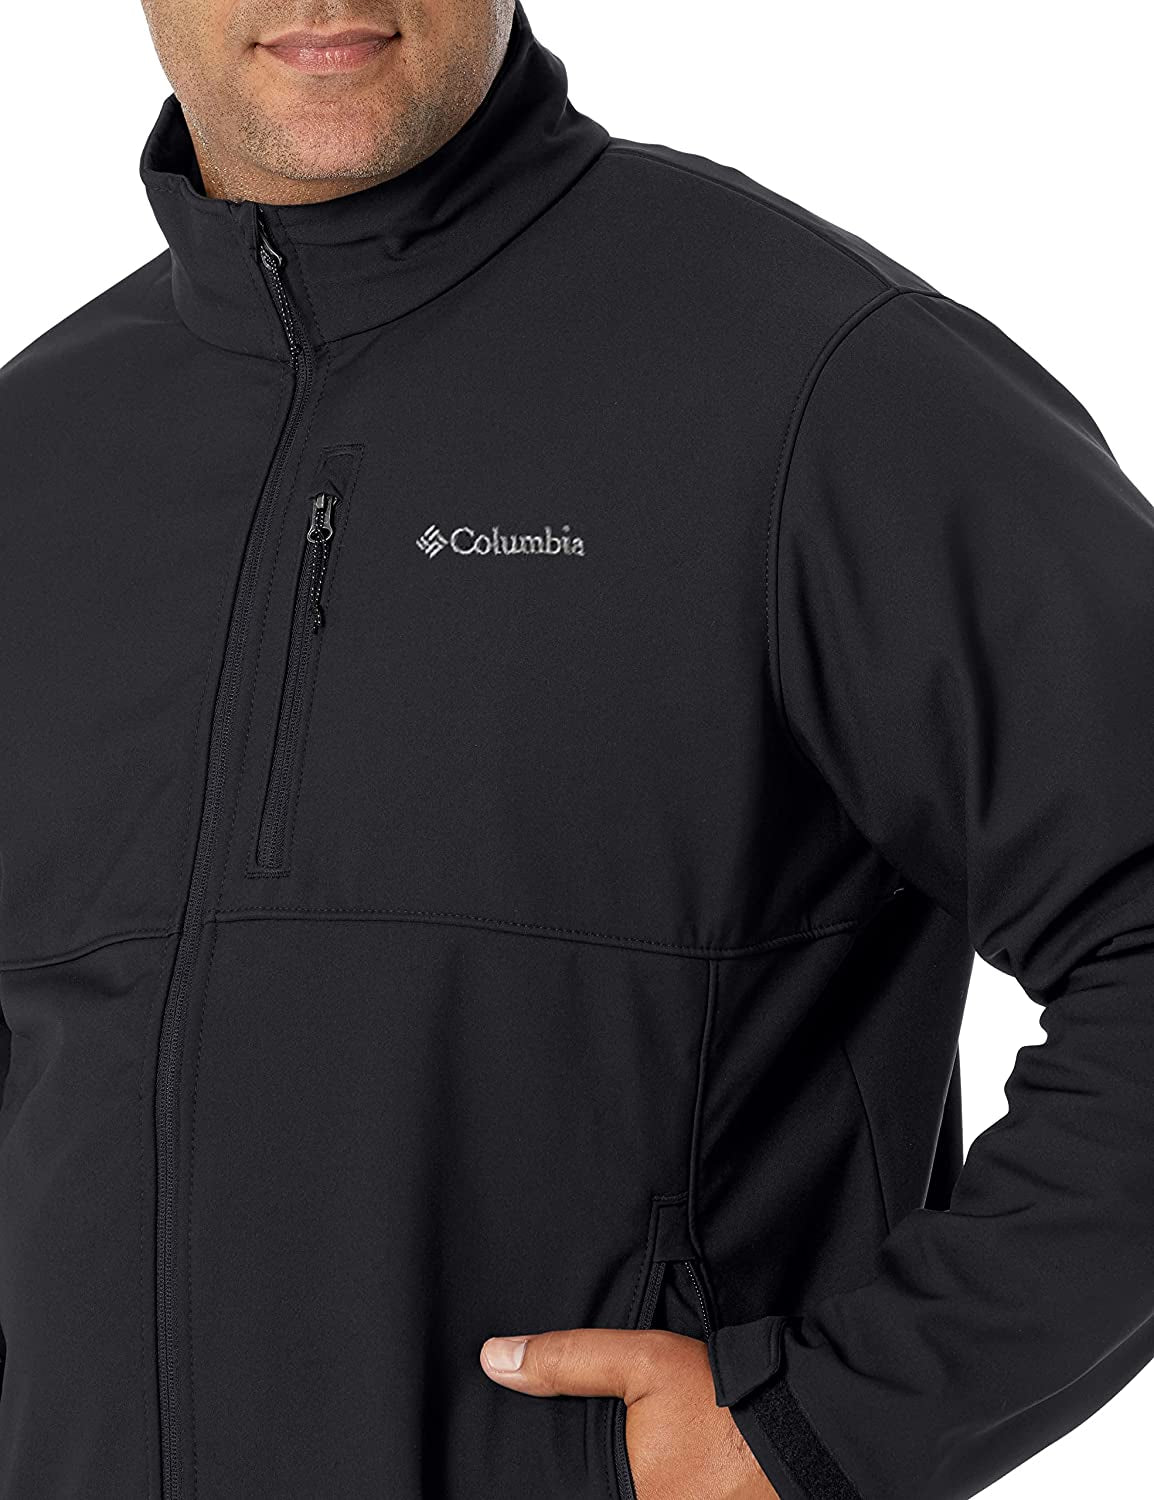 Columbia Men's Ascender Softshell Front-Zip Jacket